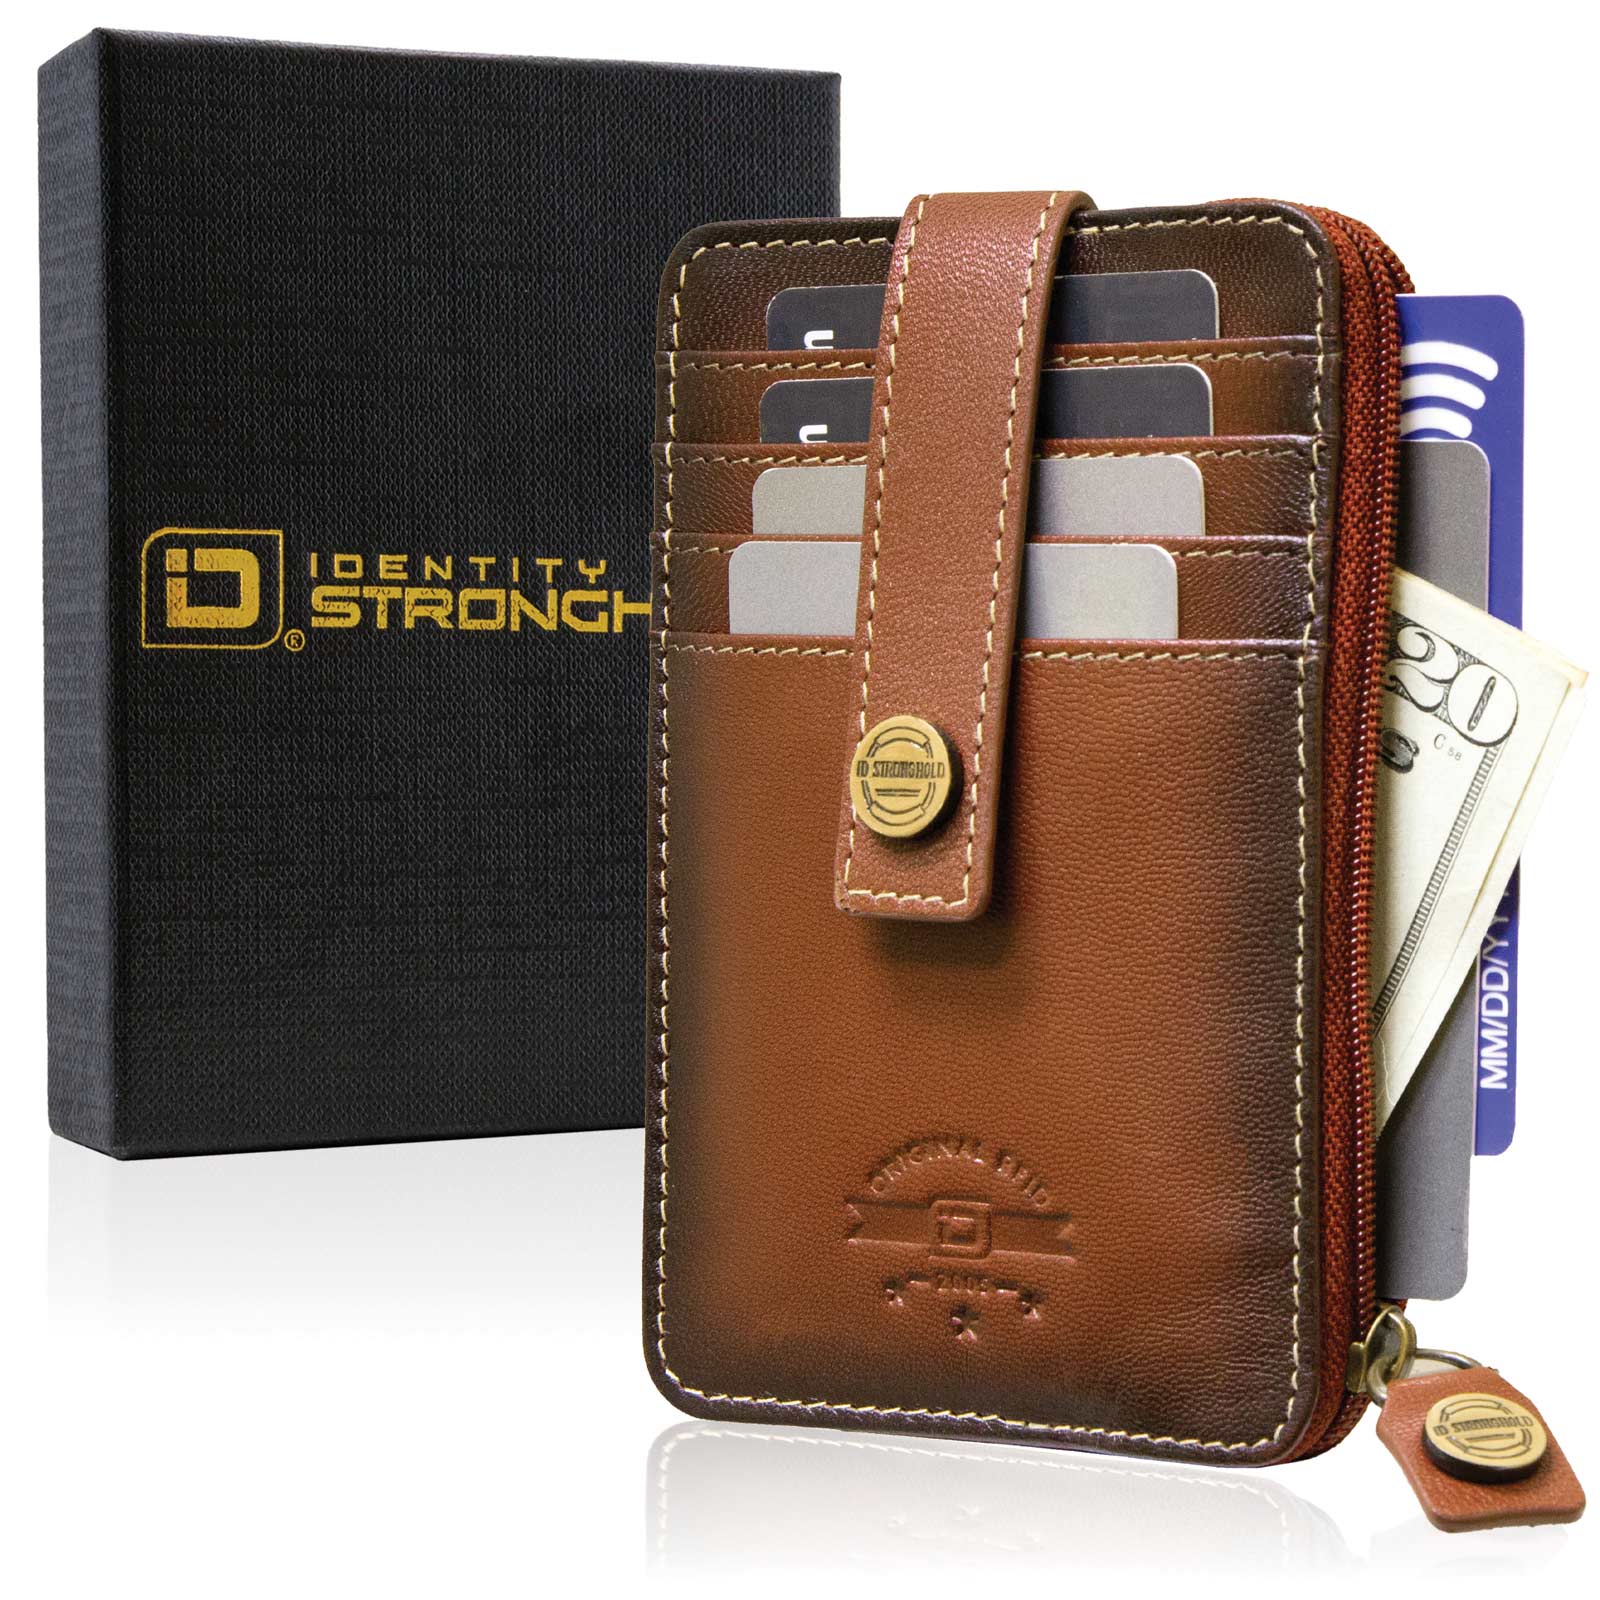 Card Blocr Credit Card Wallet, Credit Card Holder,RFID Wallet, Minimalist Card Holder, Leather Wallet, Brown - Conceal Plus, Men's, Size: 6 in